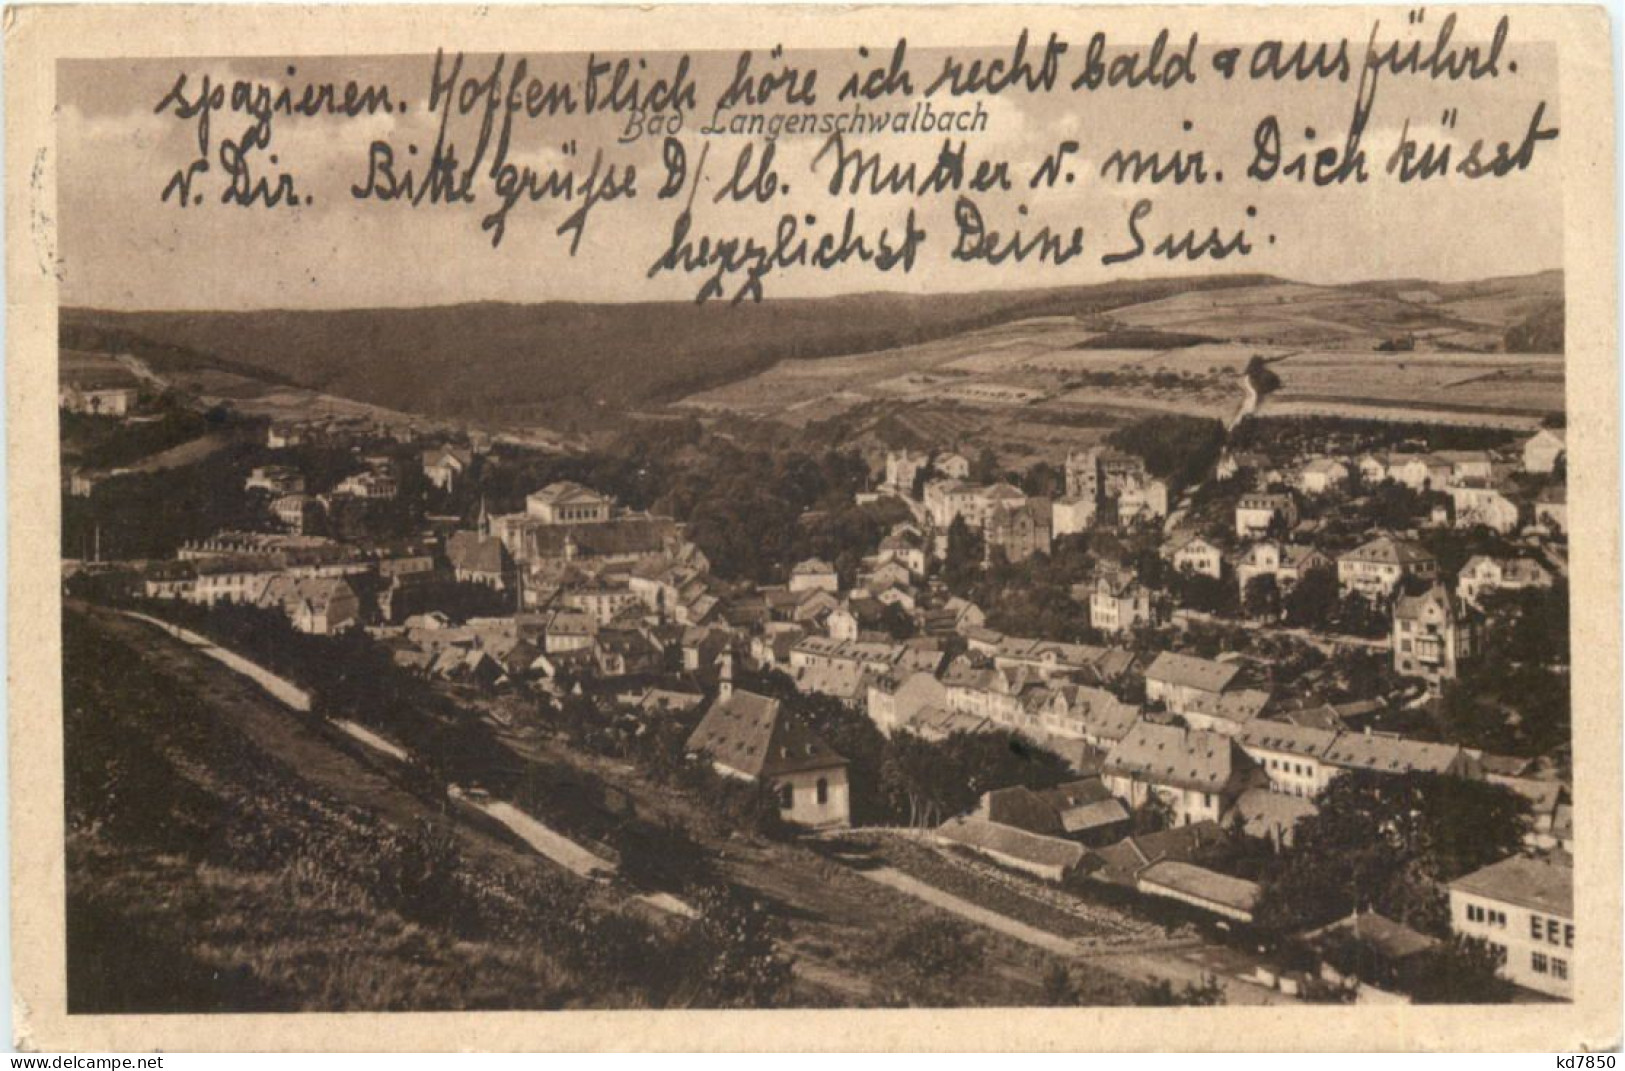 Bad Langenschwalbach - Bad Schwalbach